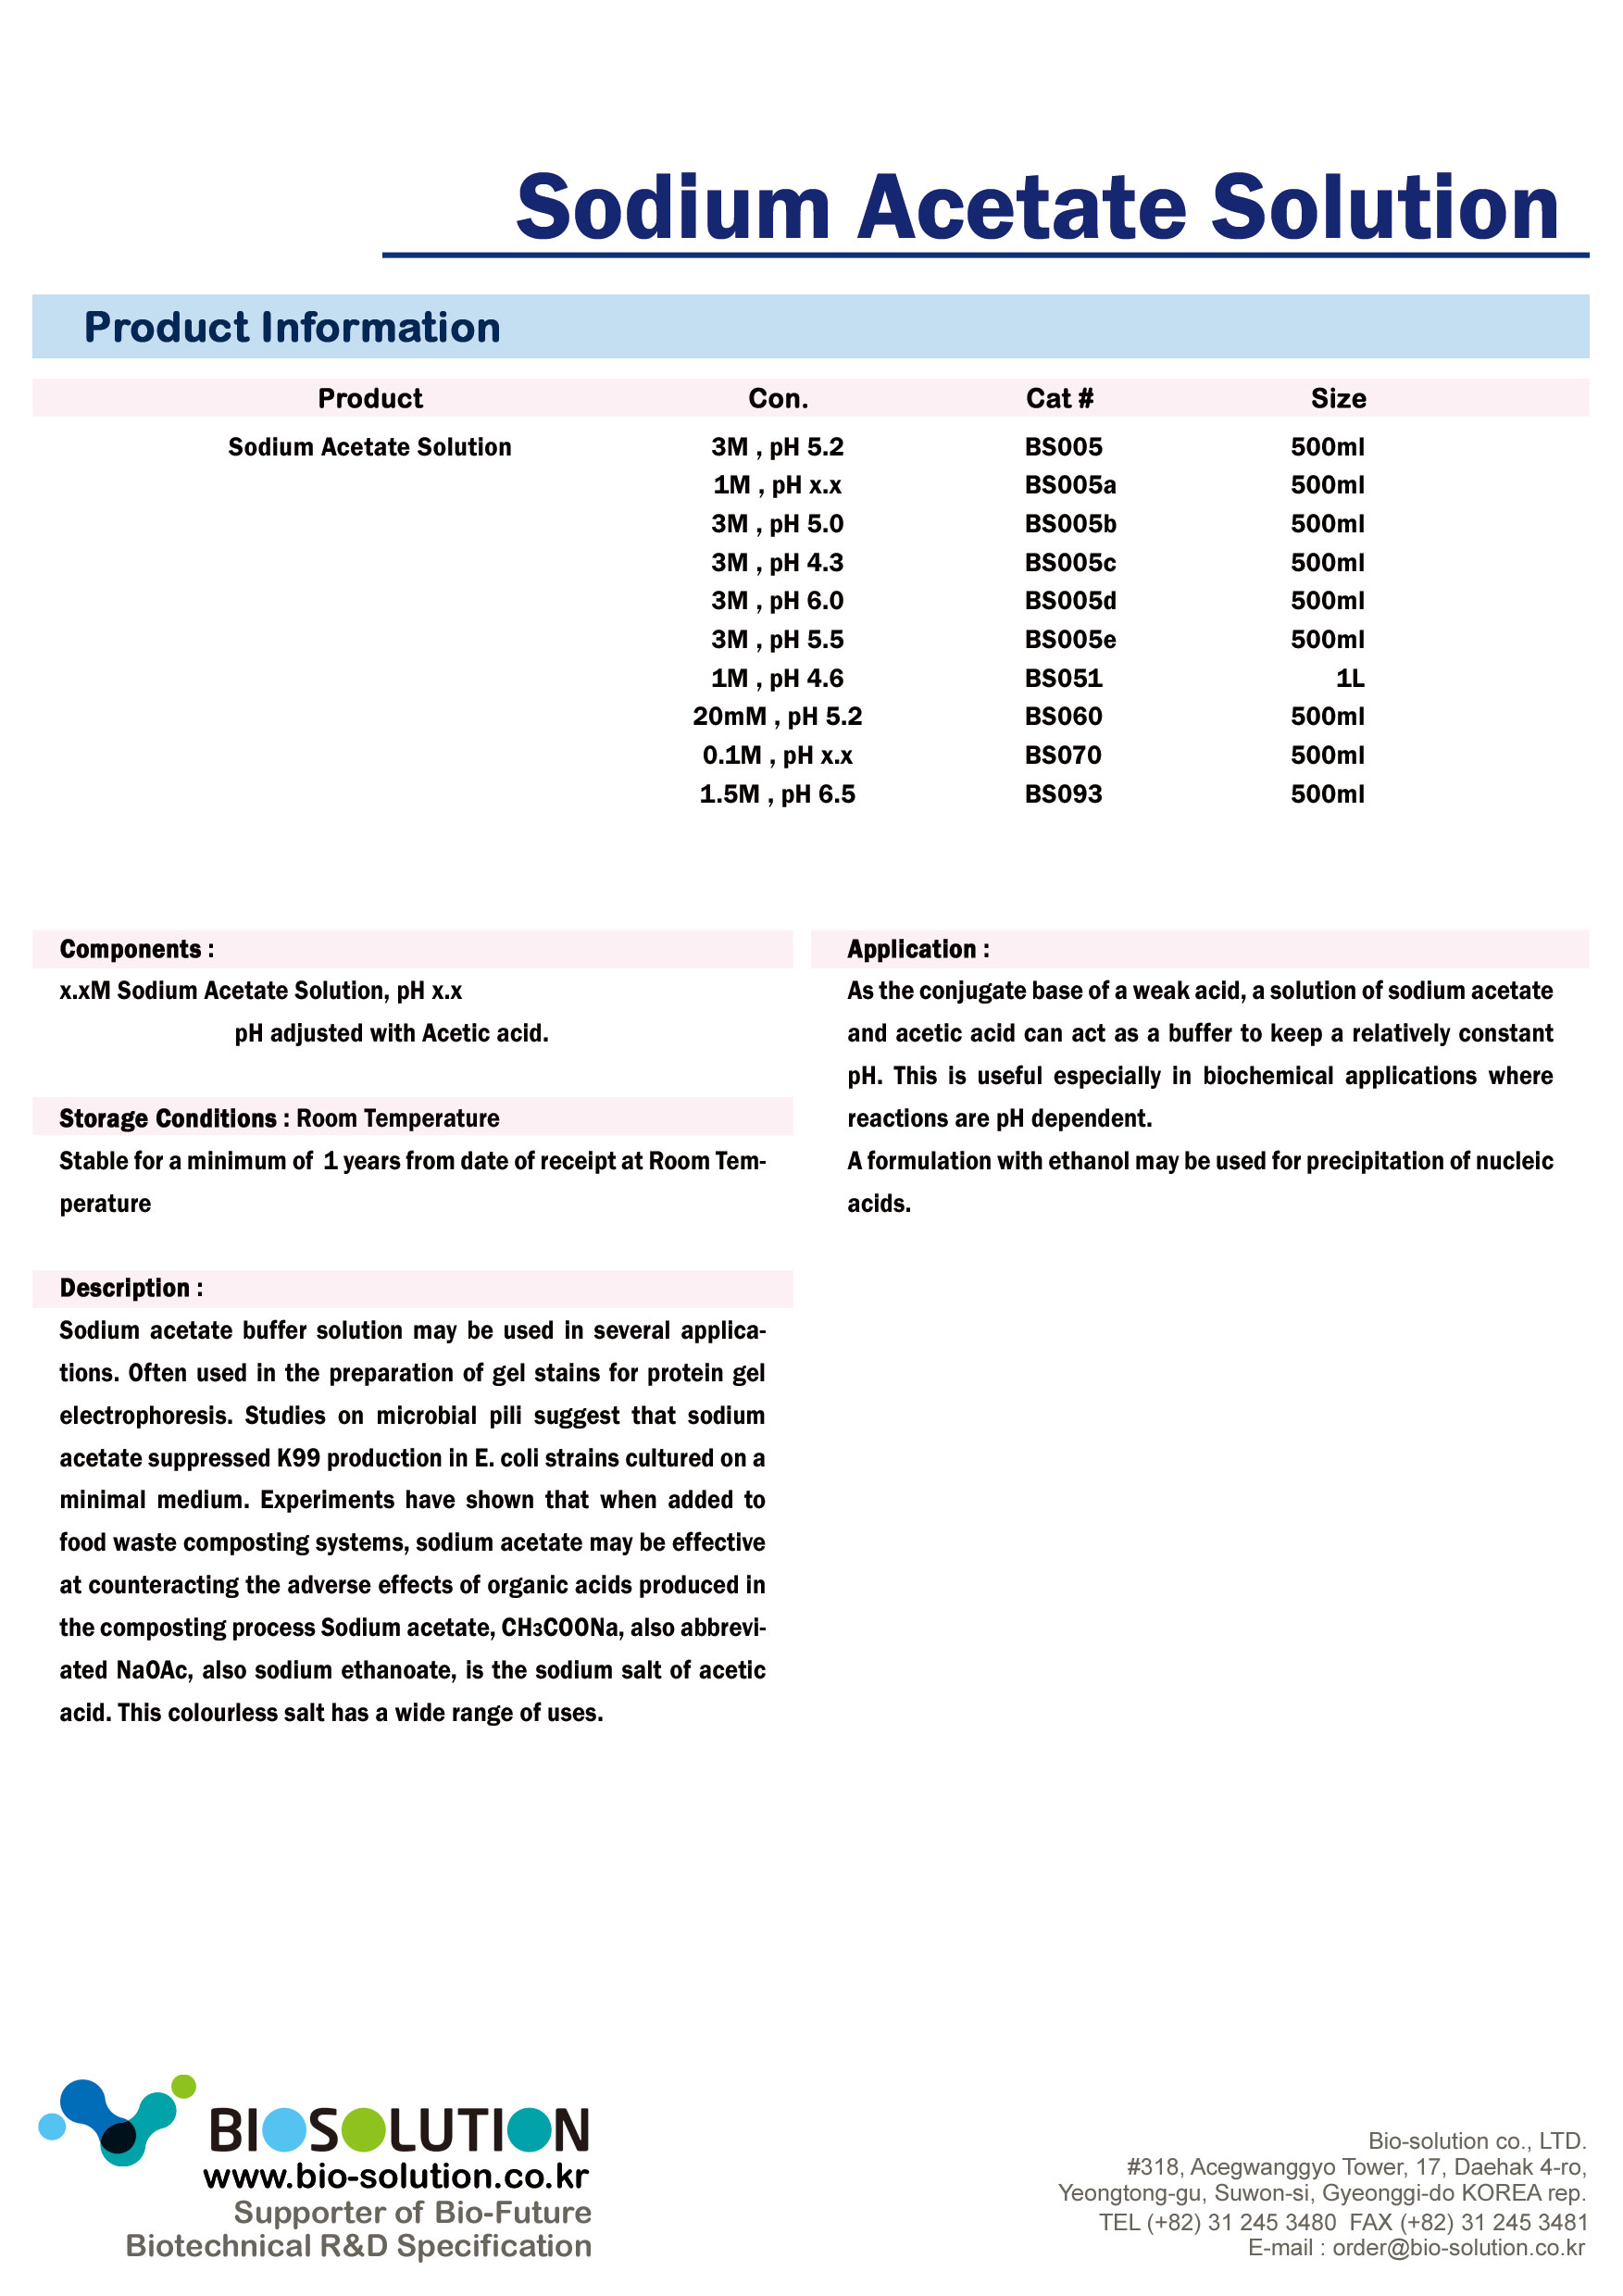 plataforma puñetazo Incentivo BS093] 1.5M Sodium Acetate, pH 6.5 | Biosolution